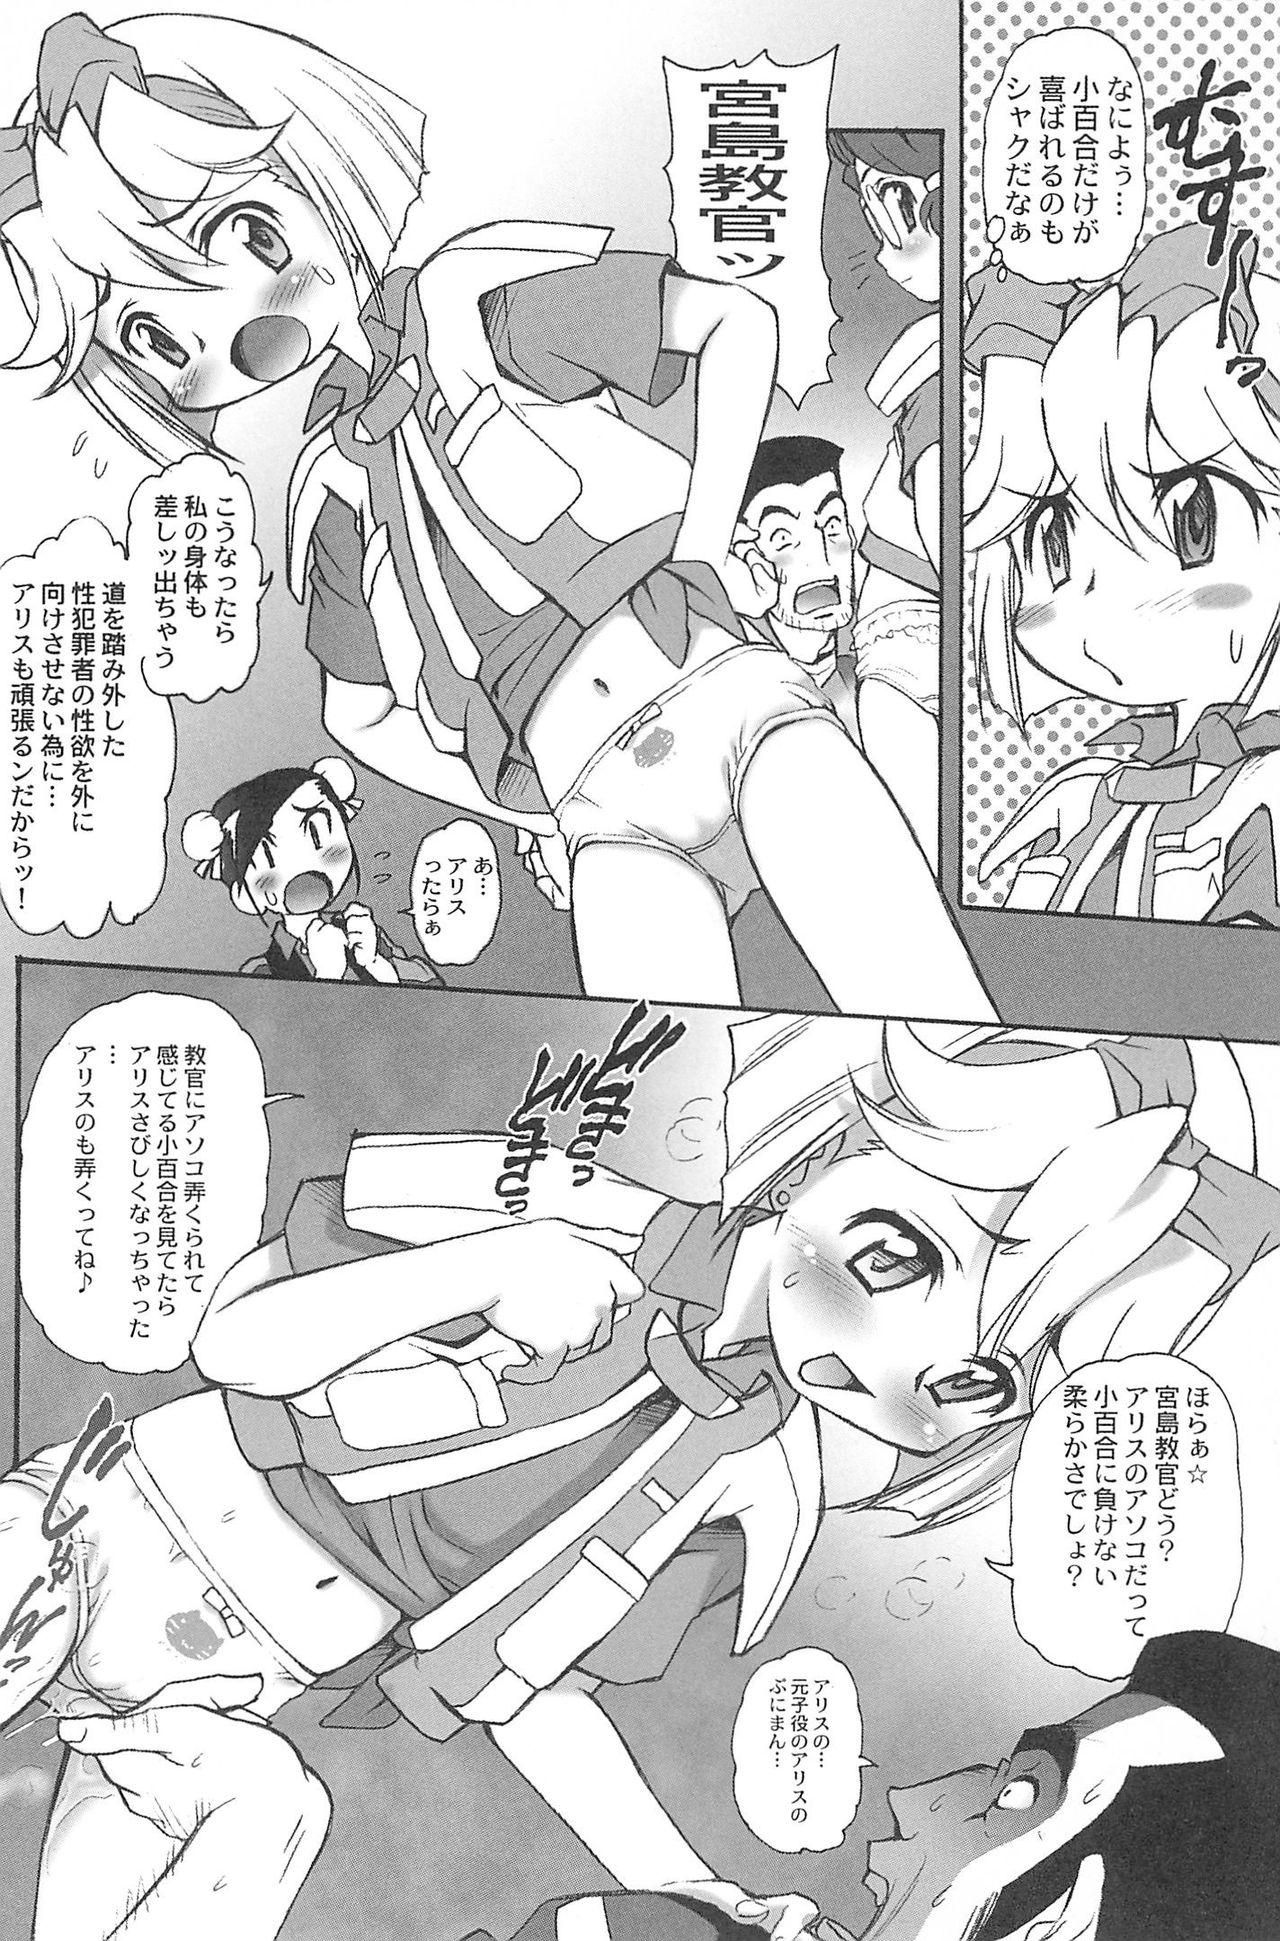 Ariake International X-rated Manga Festival Mercy Rabbit SPECIAL 79